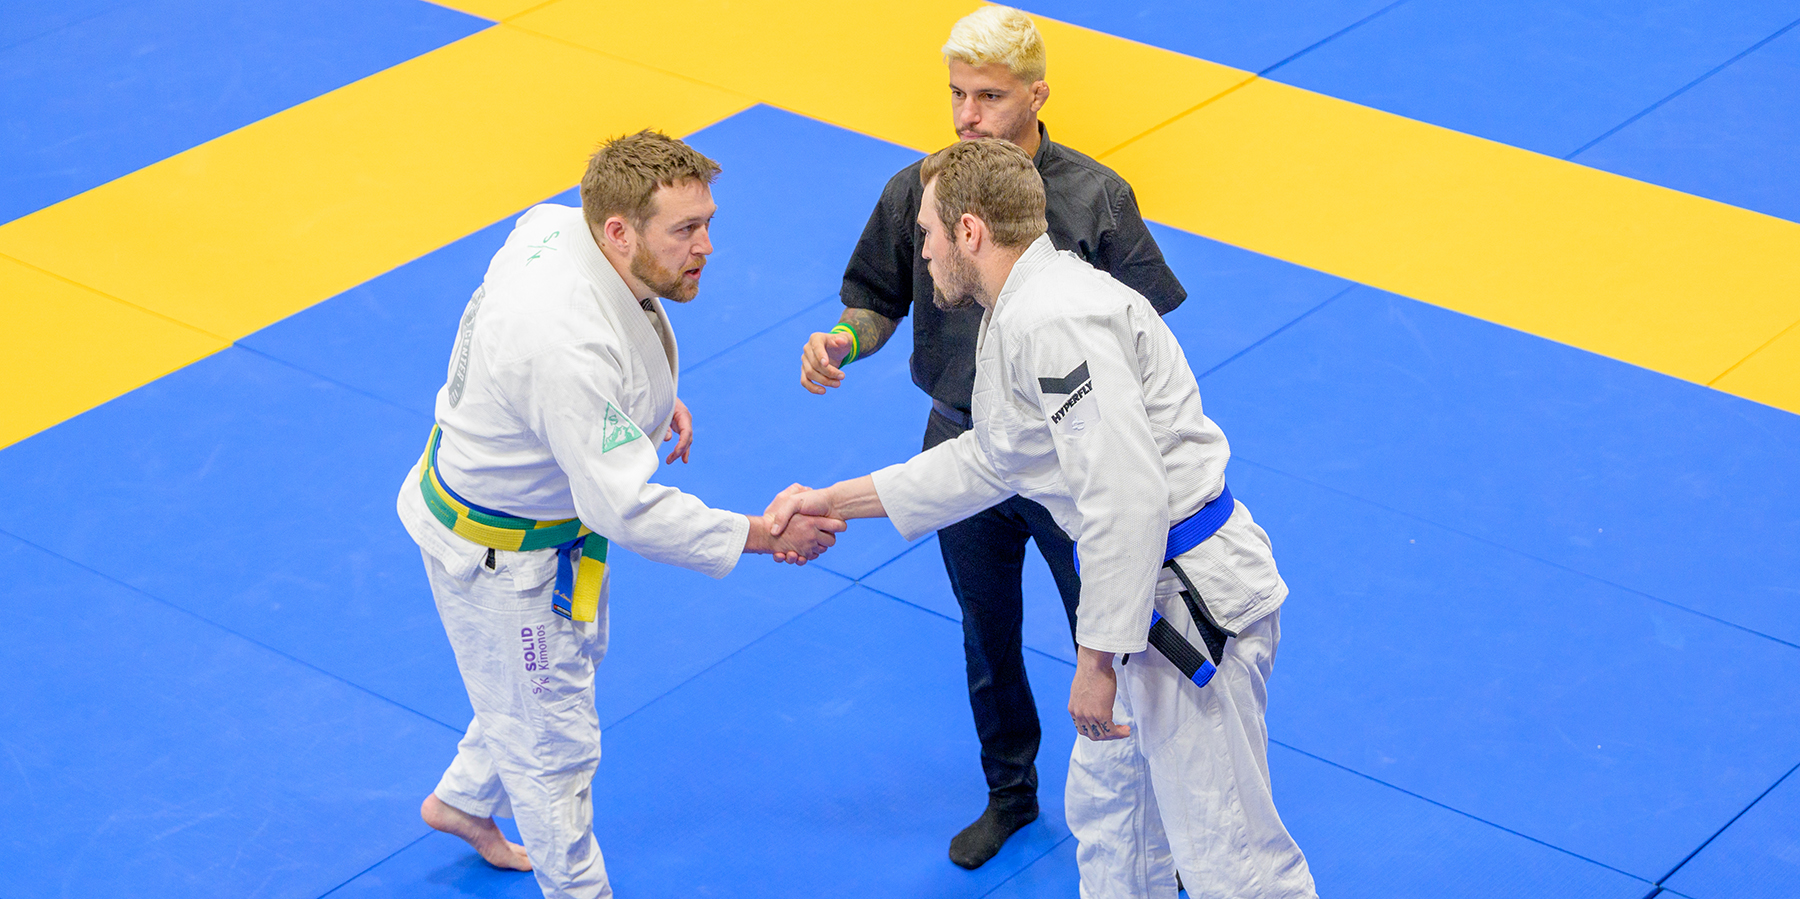 An image of two Brazilian Jiu-Jitsu competitors shaking hands before their match at the IBJJF Denver Open starts.